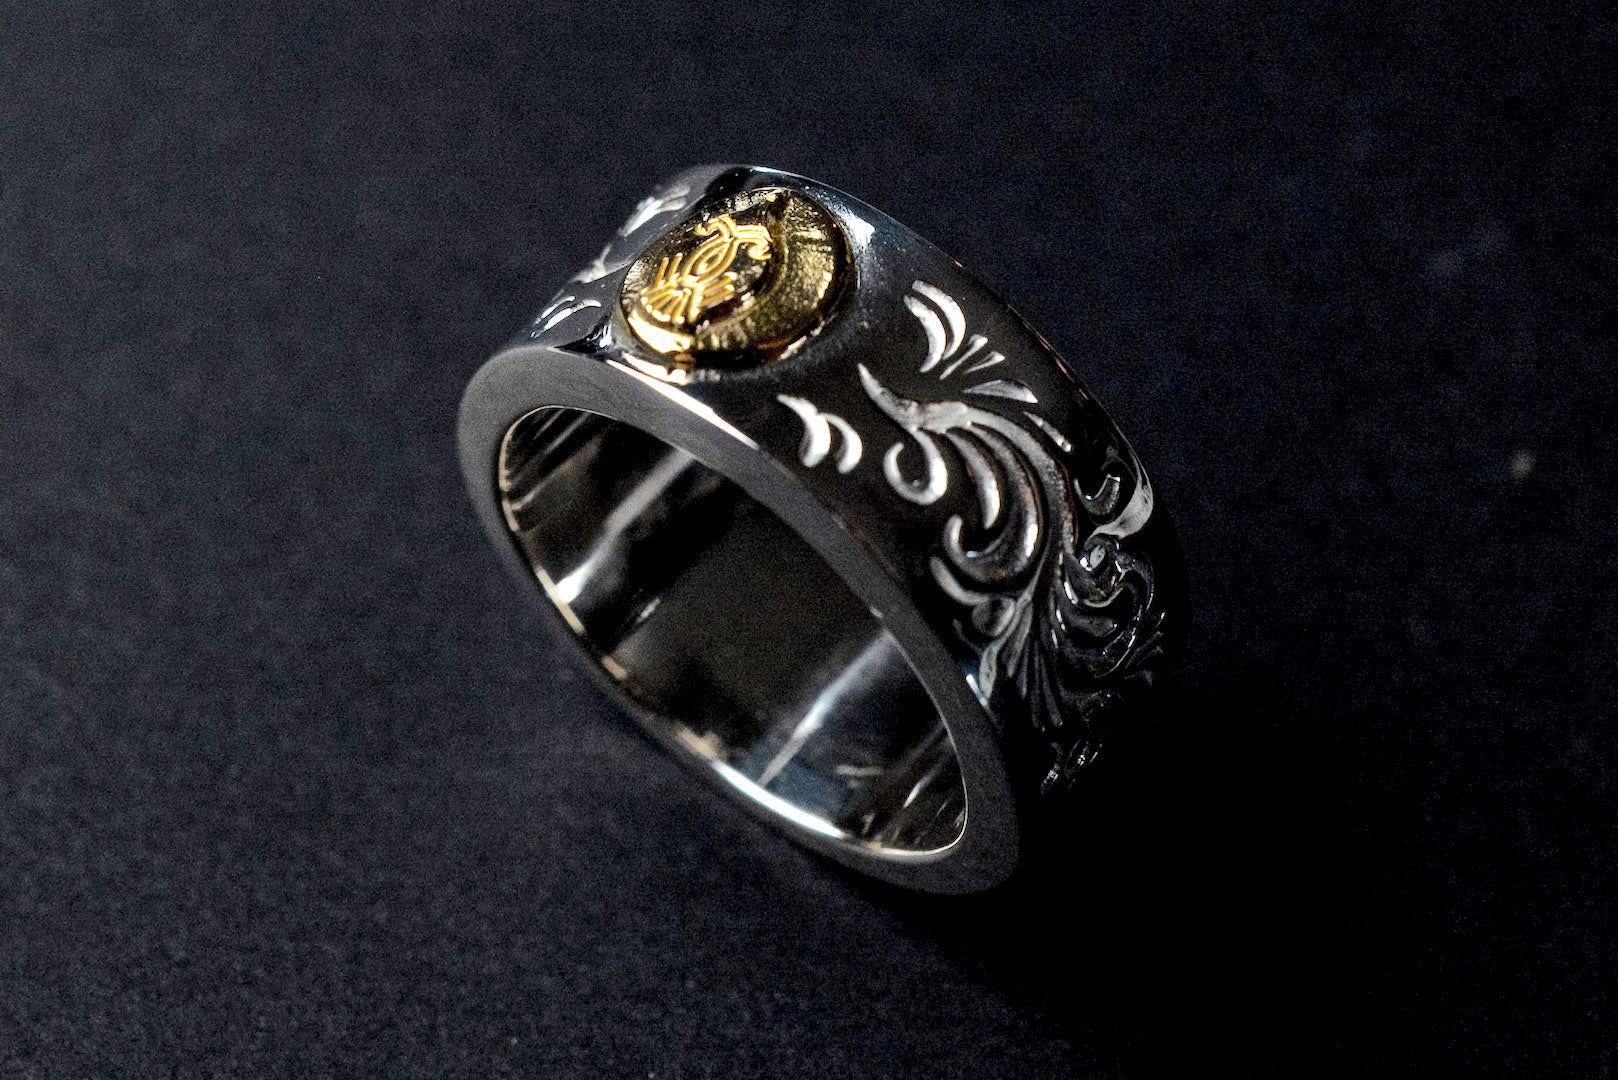 Legend 10MM "Phoenix" Bangled Ring With 22K Gold Emblem (R-3)